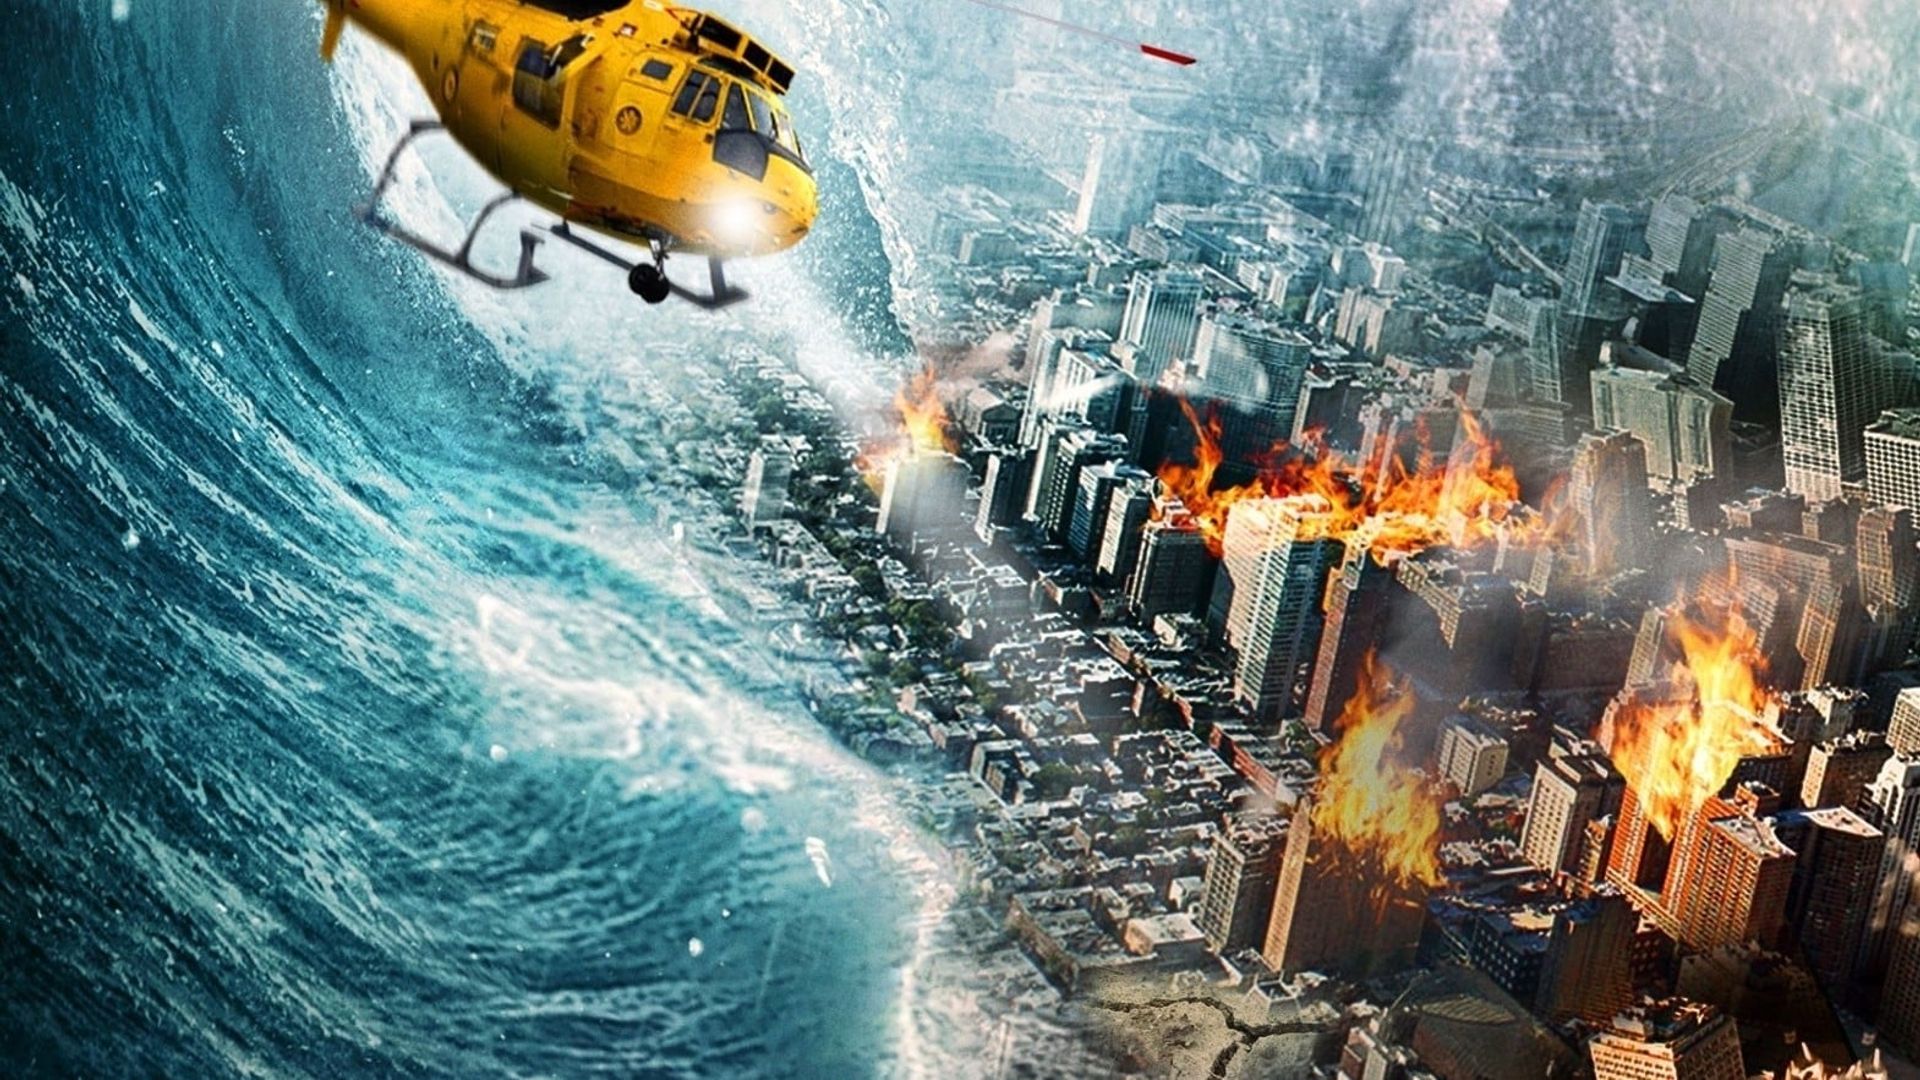 Disaster Wars: Earthquake vs. Tsunami background